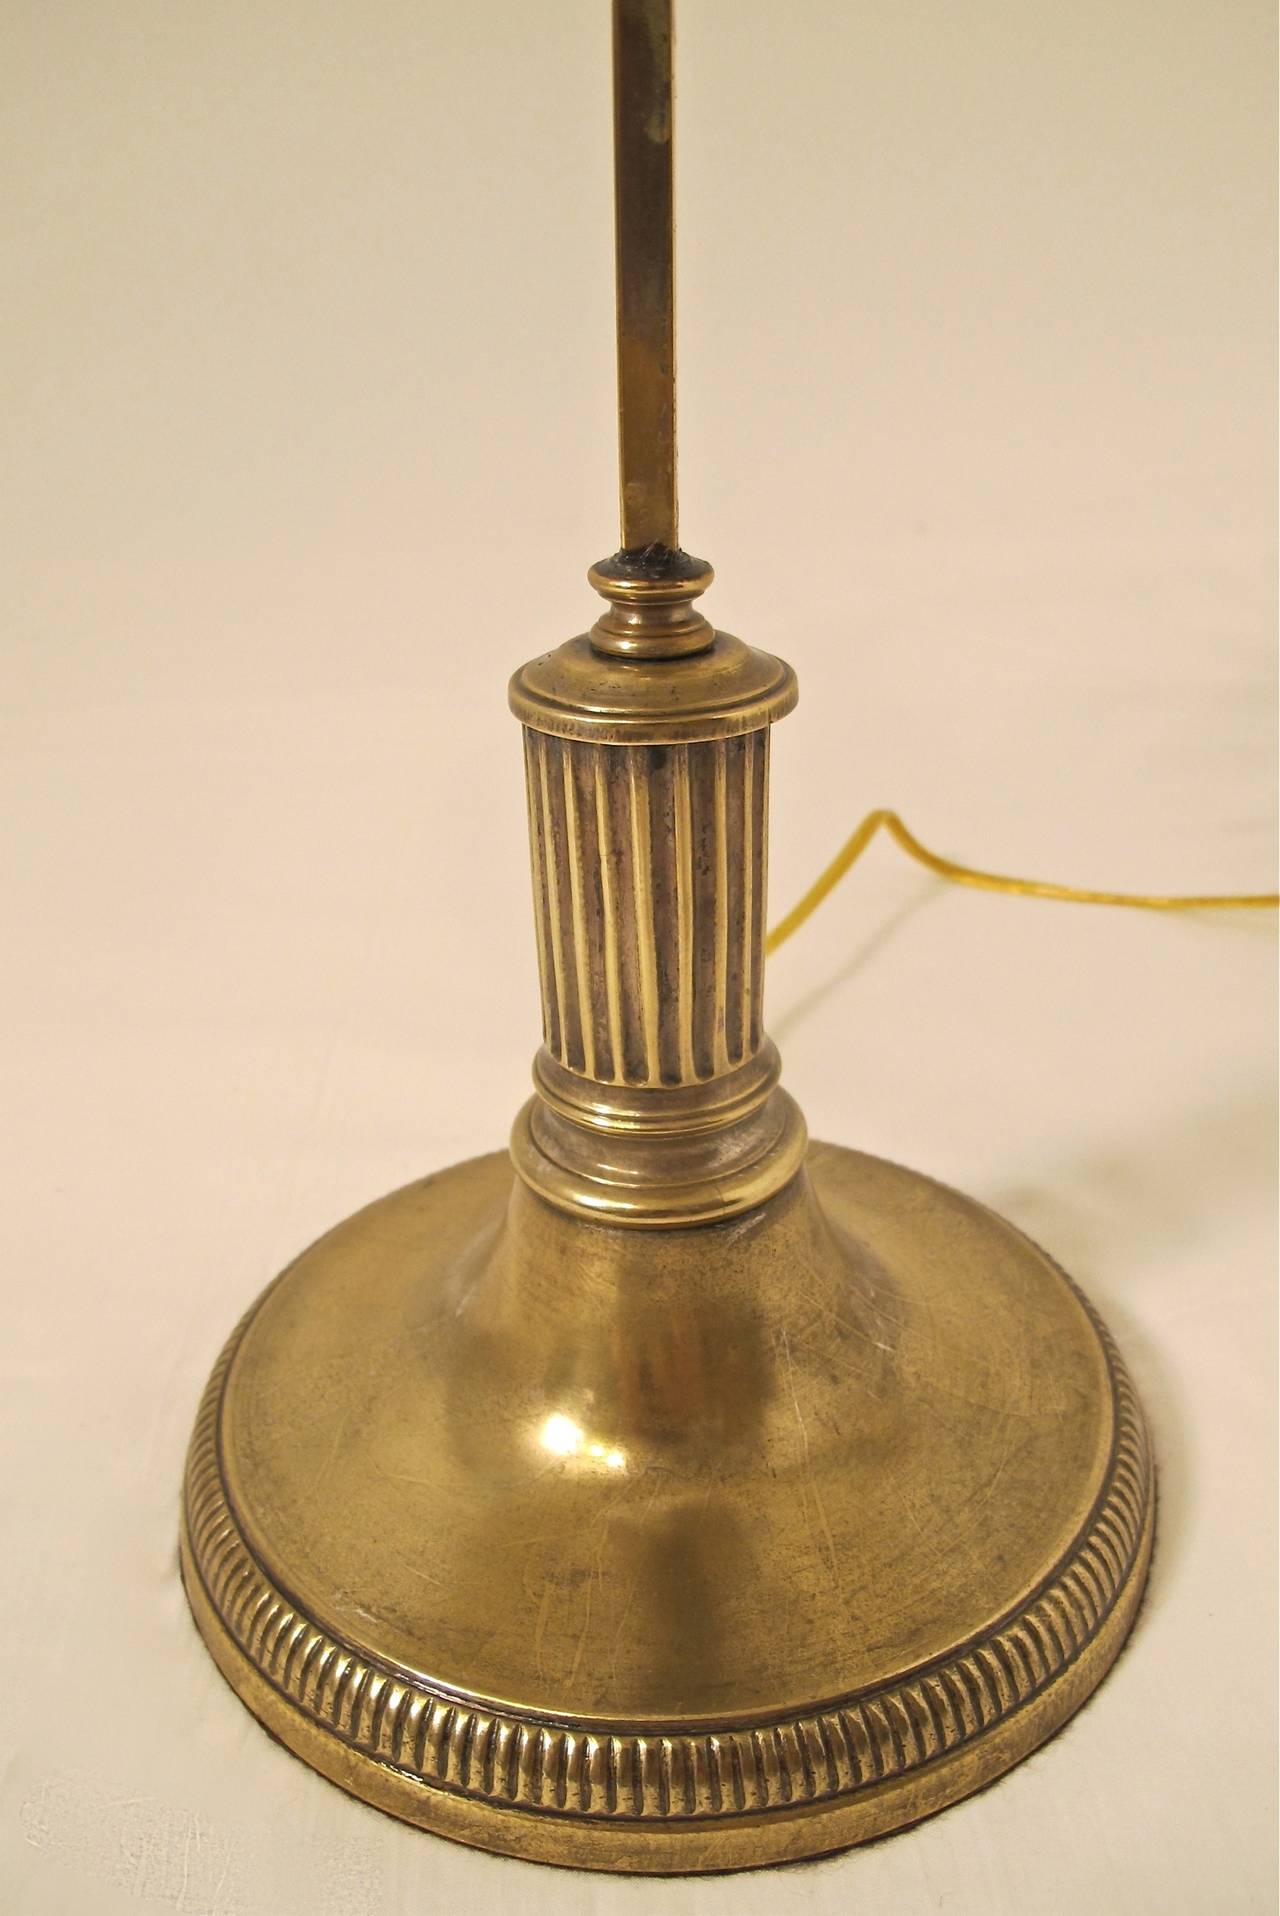 bouillotte lamp for sale